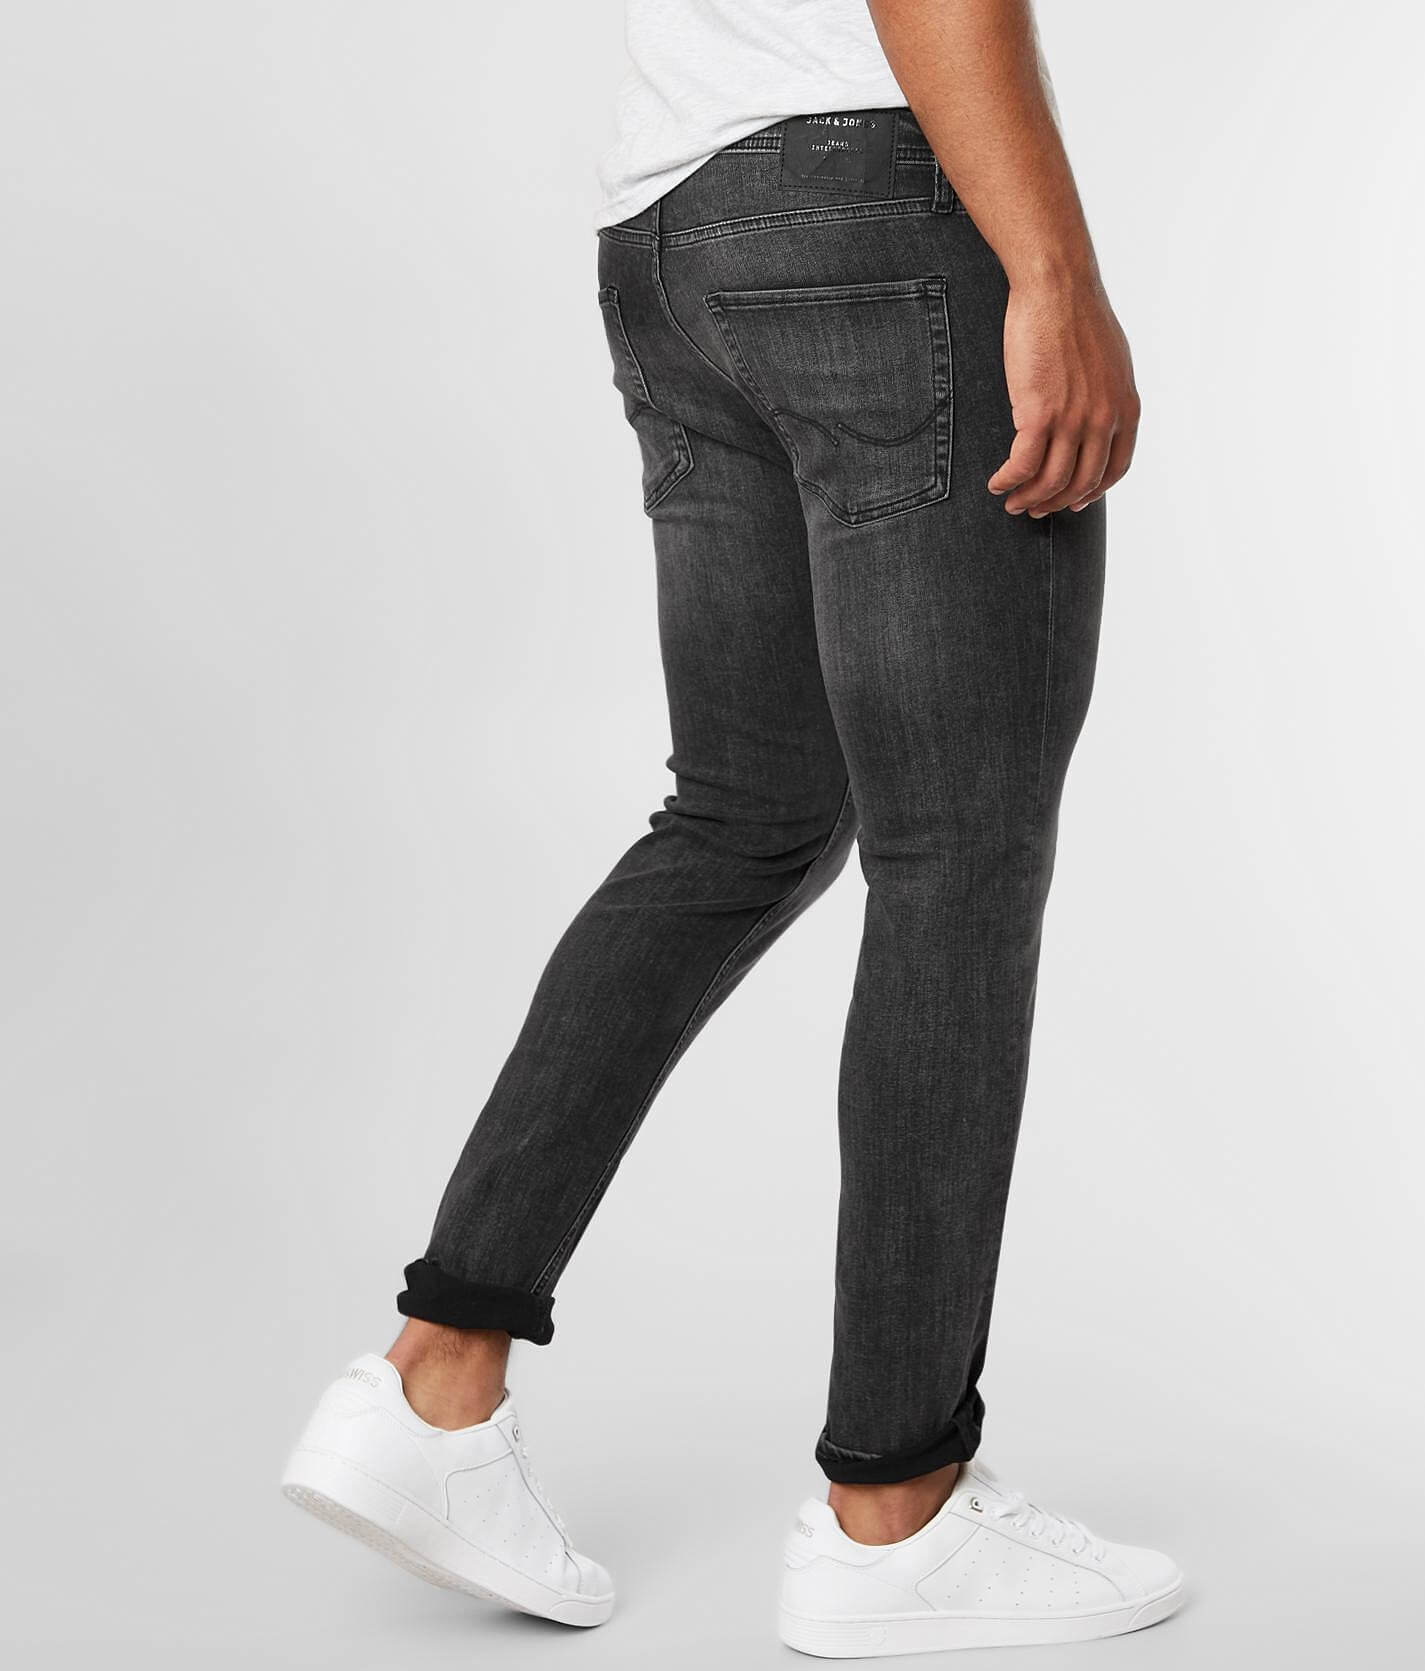 black slim stretch jeans mens